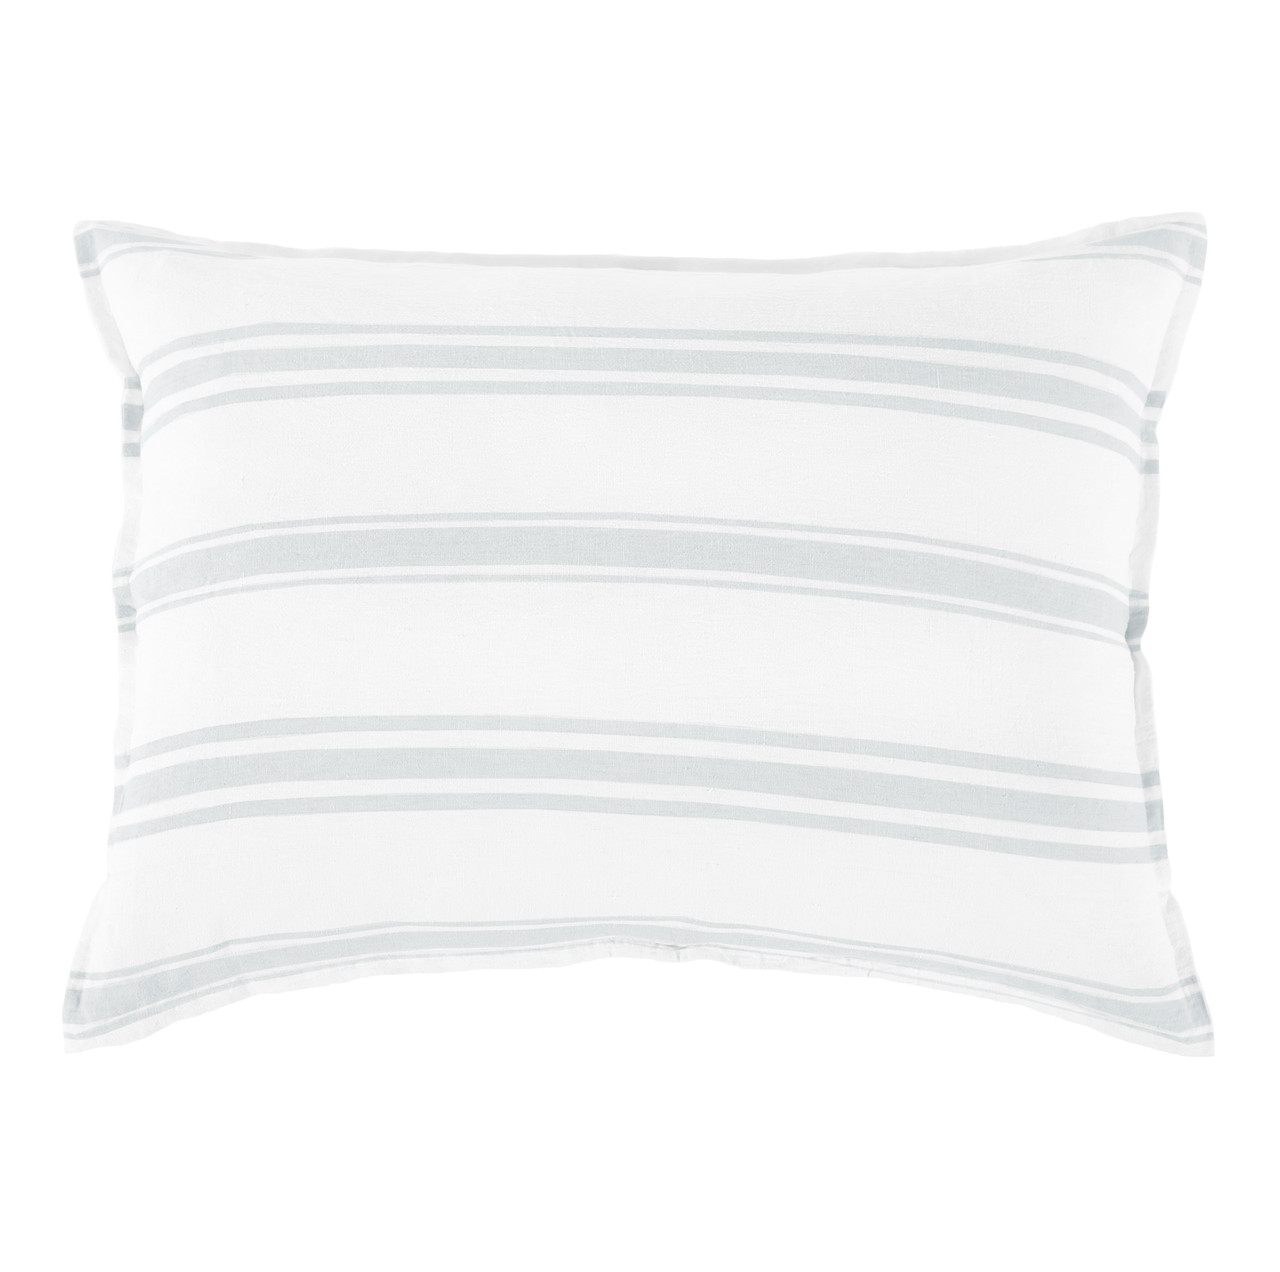 Oversized Decorative Pillows - Fashion Jackson